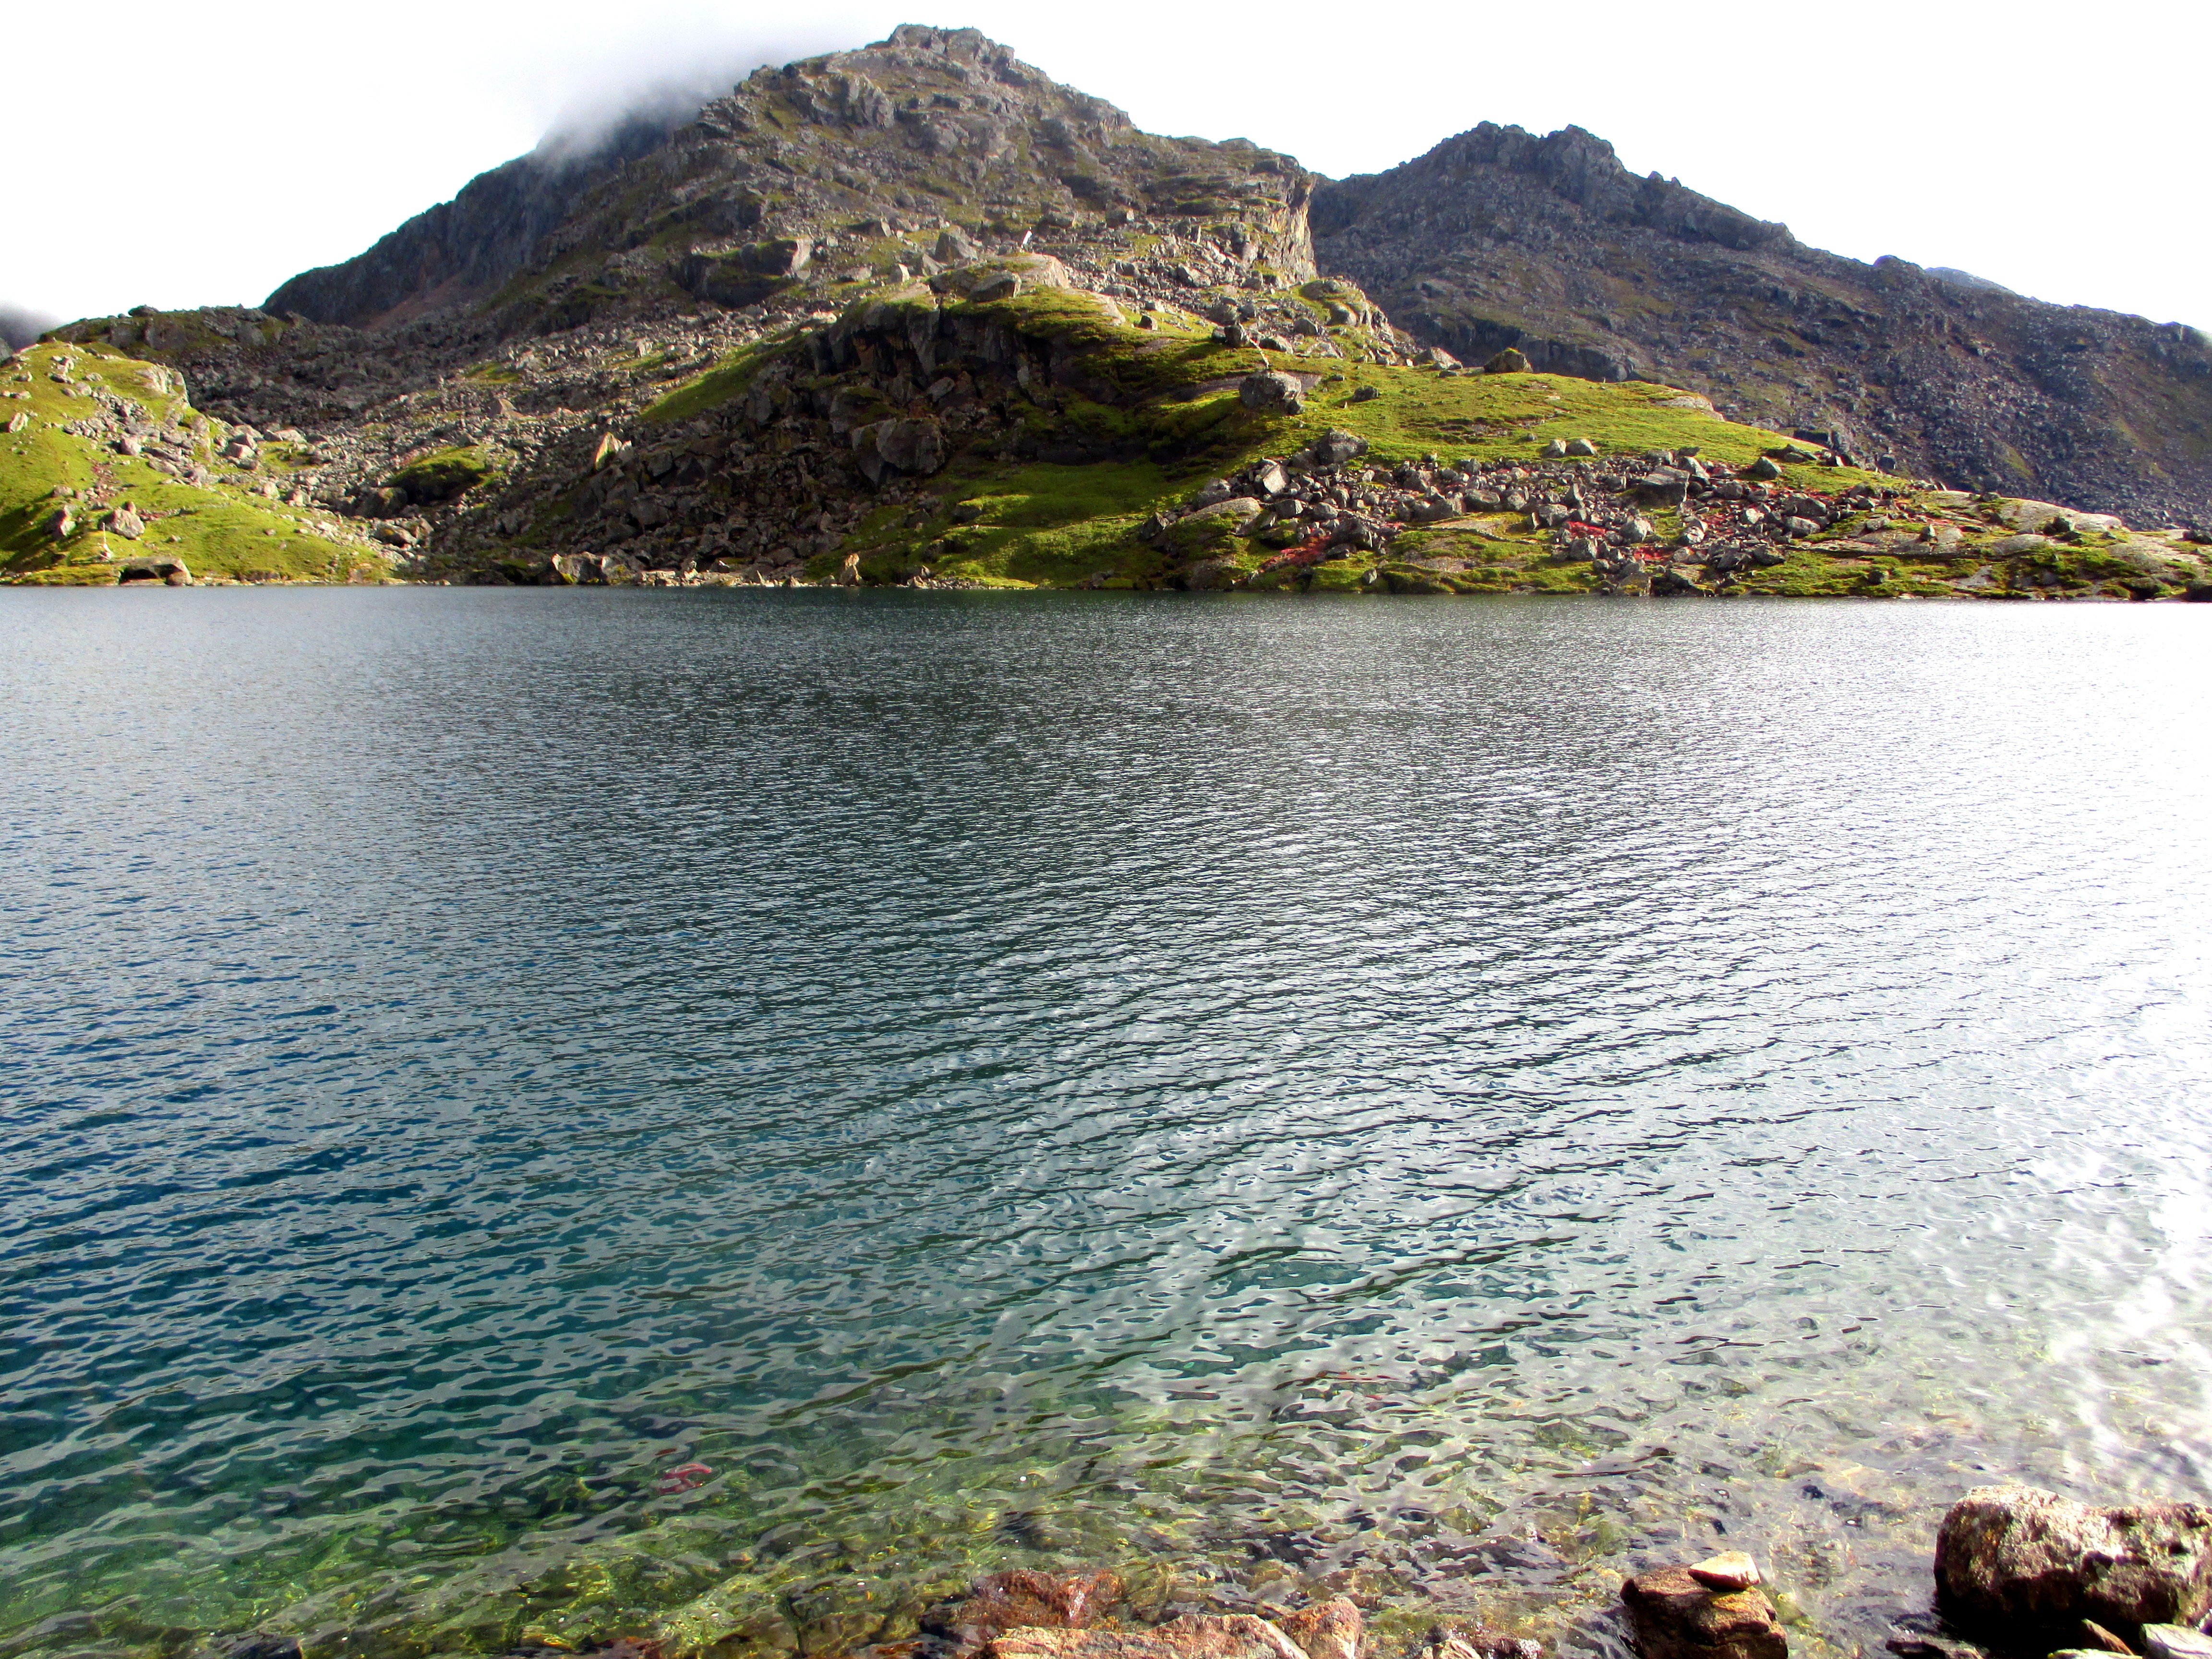 General 4608x3456 Nepal Gosaikunda lake nature water outdoors